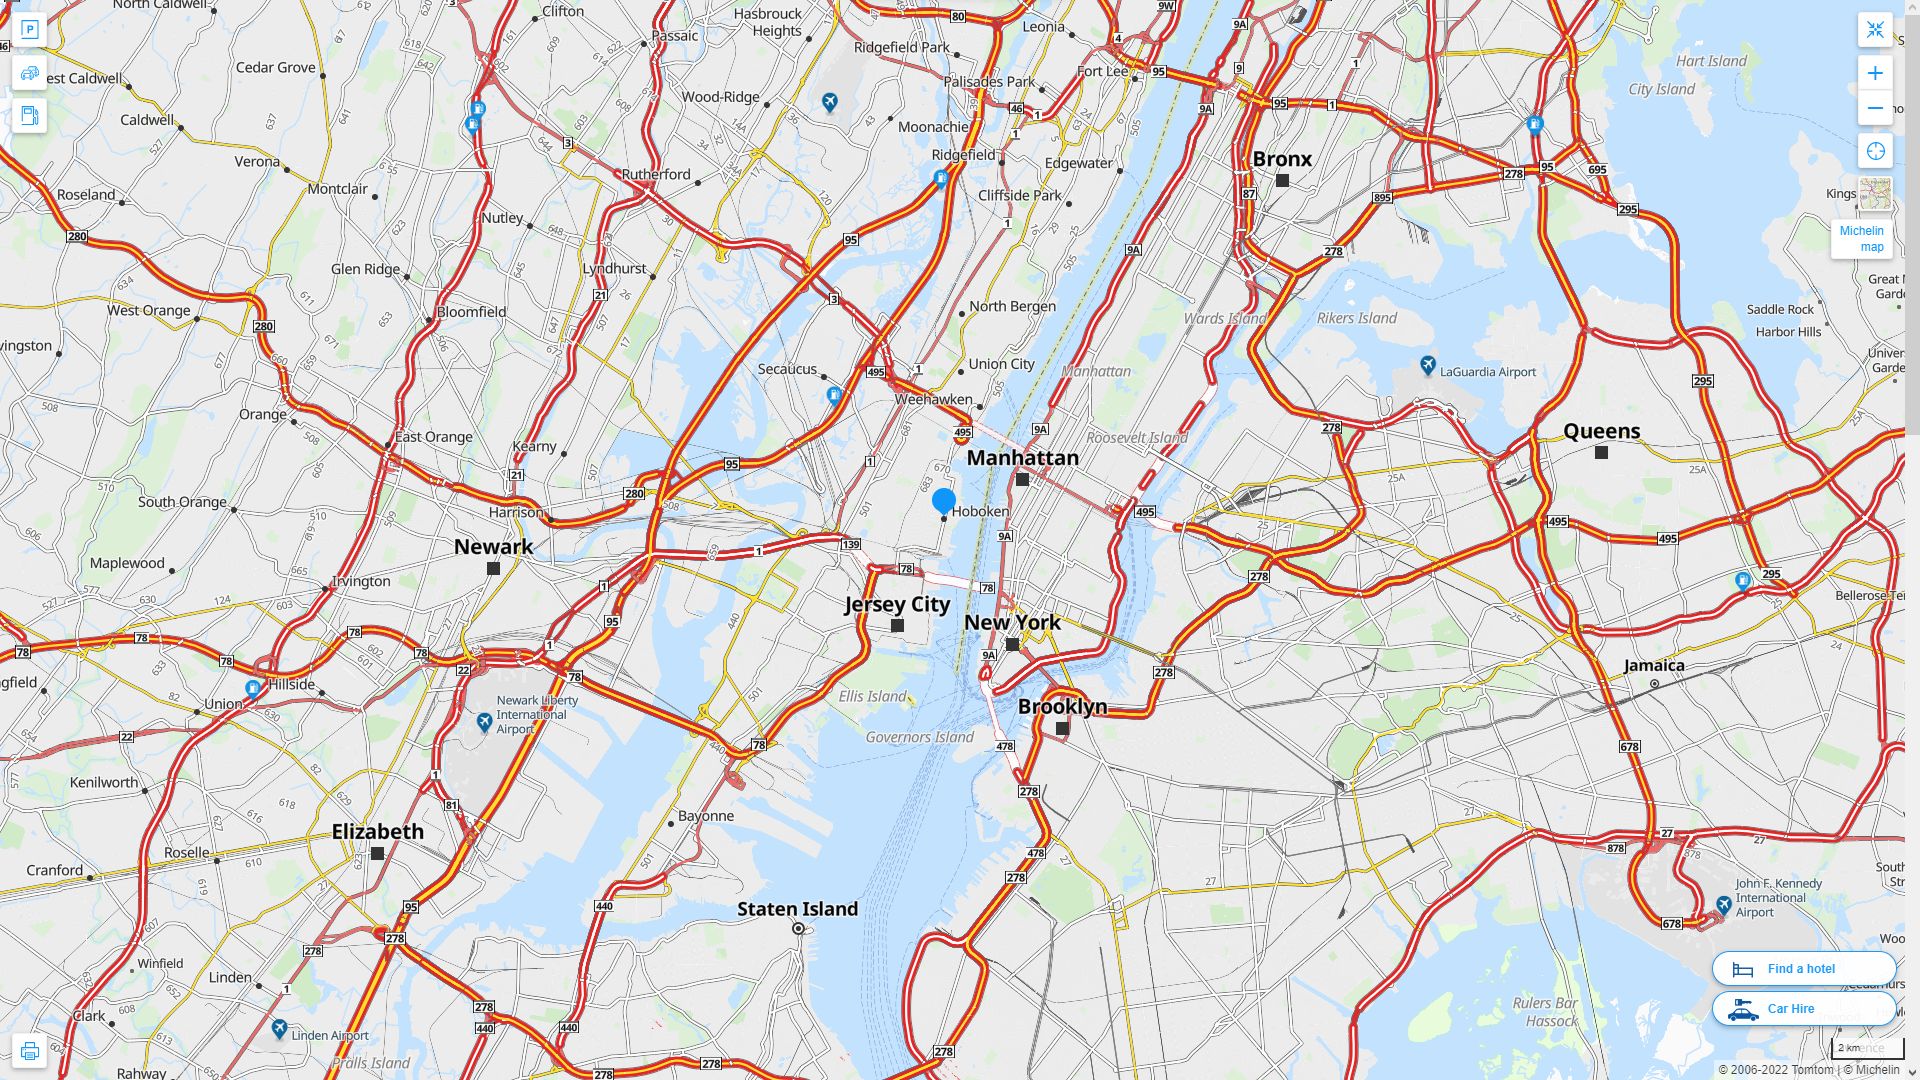 Hoboken New Jersey Highway and Road Map